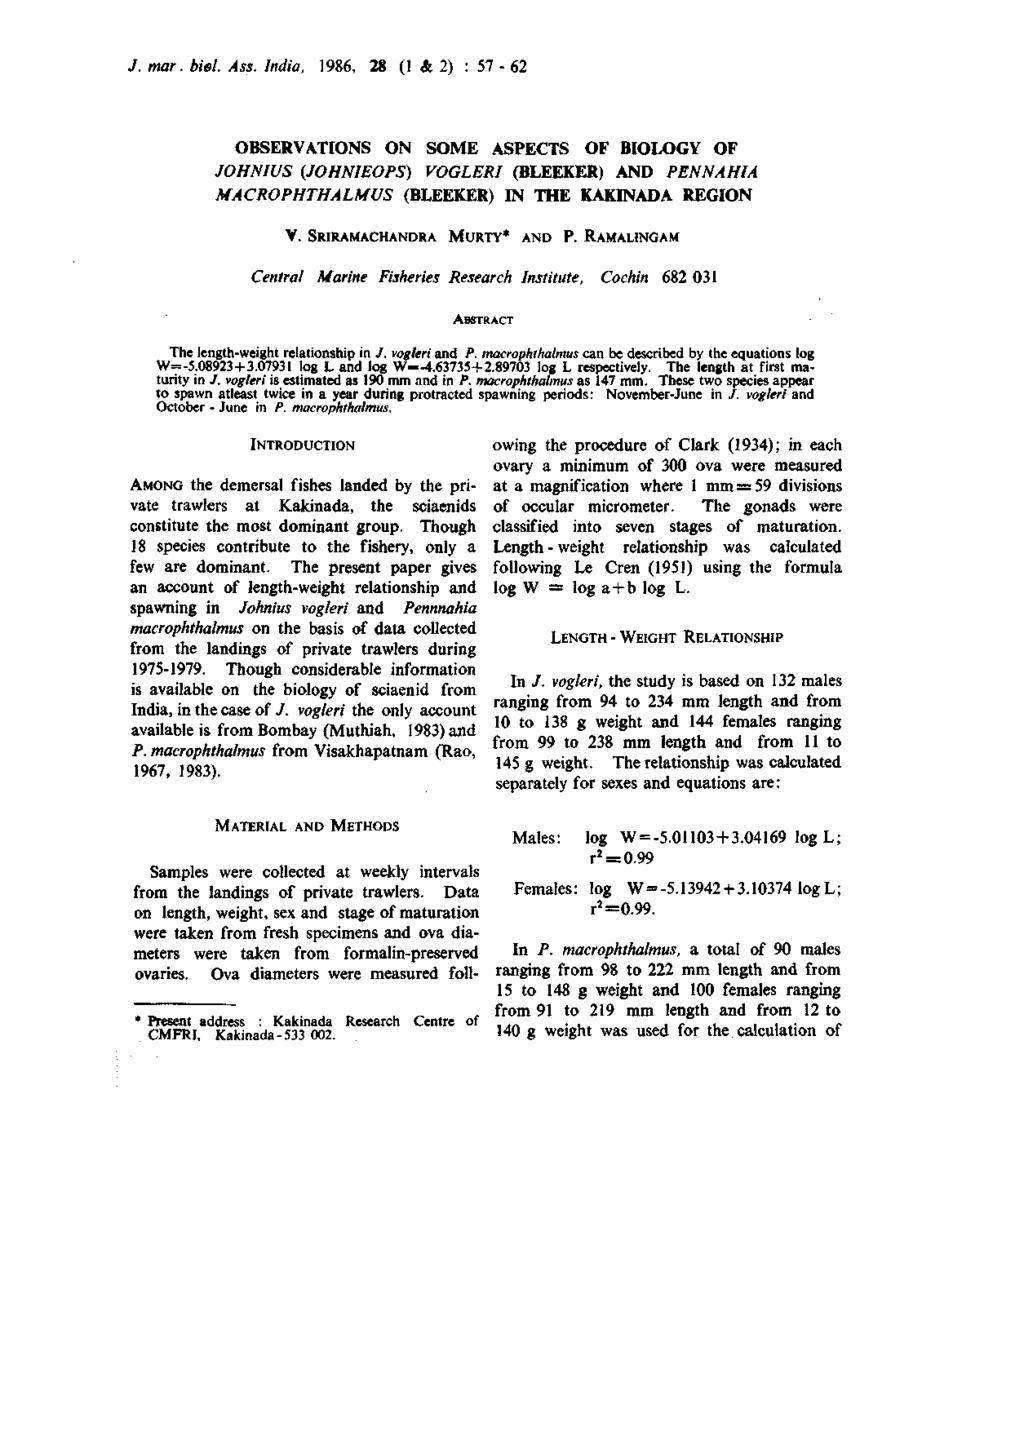 /. mar. biel. Ass. India. 1986, 28 (1 & 2) : 57-62 OBSERVATIONS ON SOME ASPECTS OF BIOLOGY OF JOHNIUS (JOHNIEOPS) VOGLERI (BLEEKER) AND PENNAHIA MACROPHTHALMUS (BLEEKER) IN THE KAKINADA REGION V.